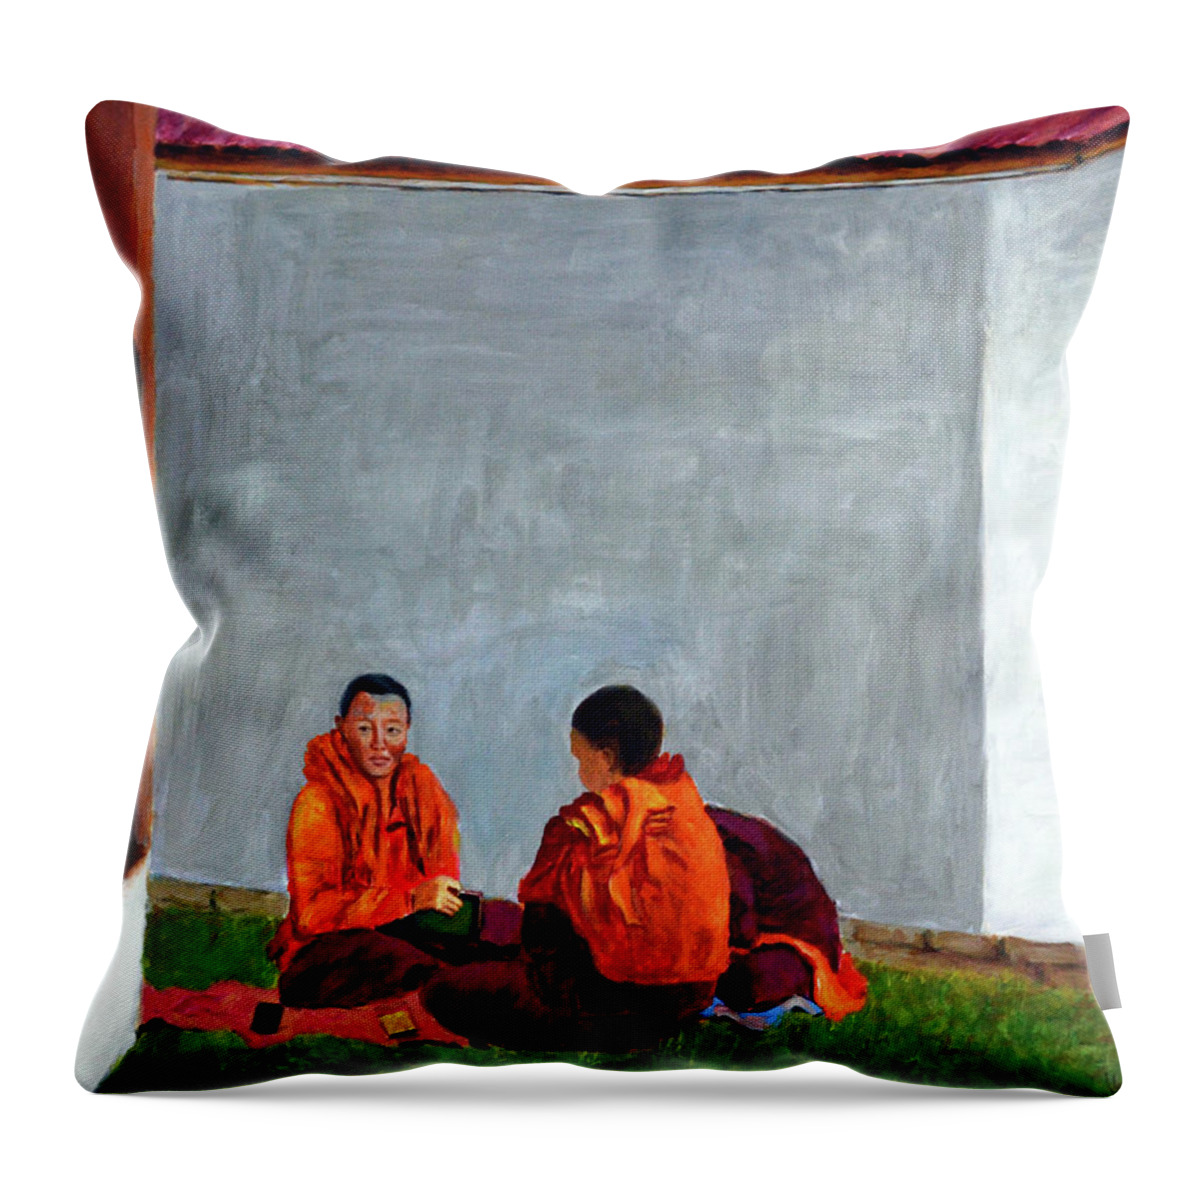 Buddhist Nuns In The Making Throw Pillow featuring the painting Buddhist Nuns in the making by Uma Krishnamoorthy